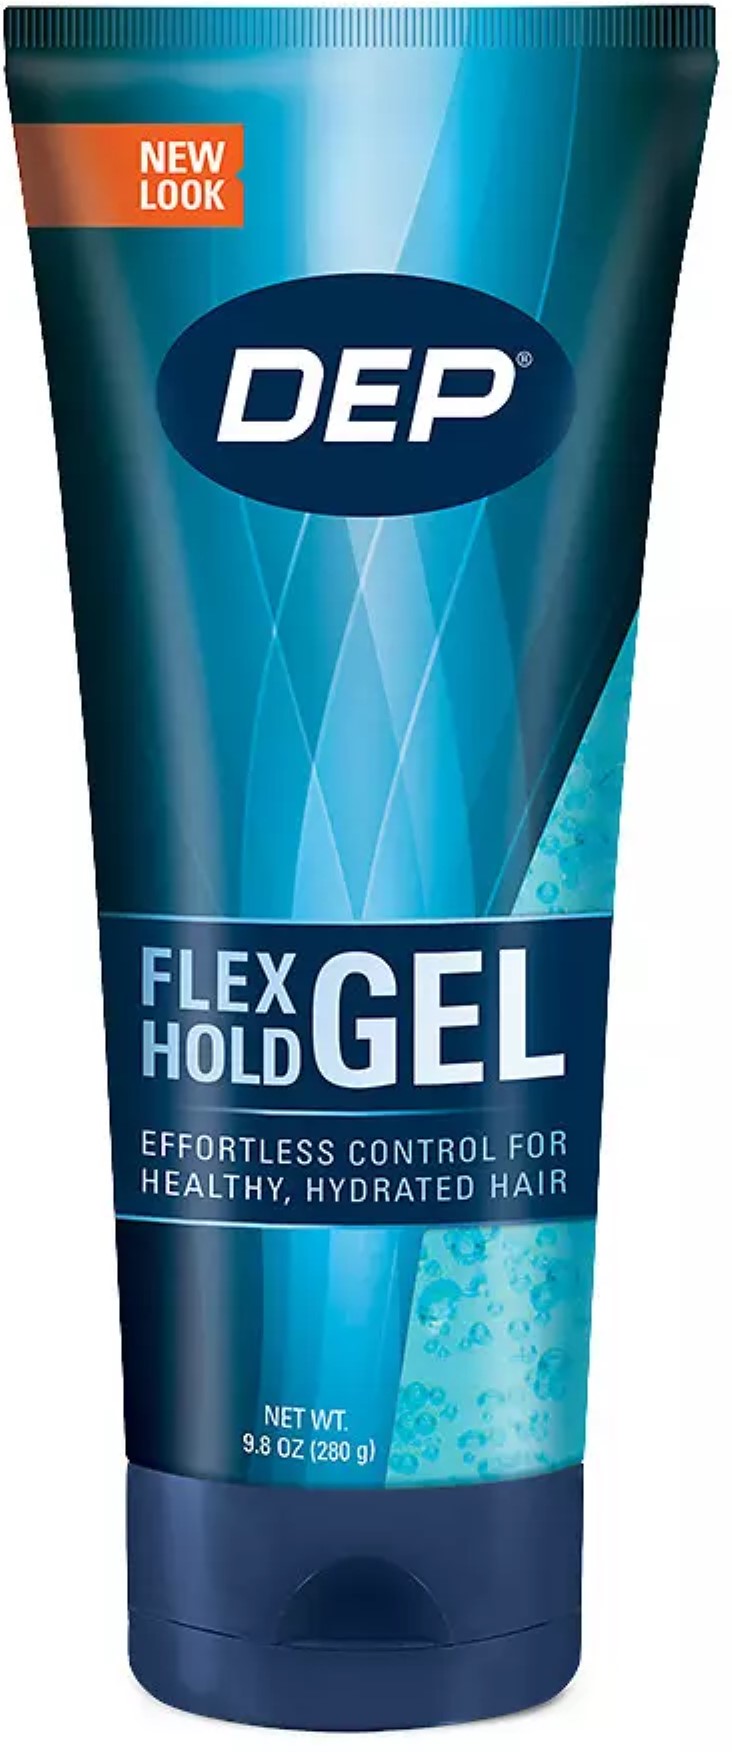 DEP SPORT Flex Hold Hair Gel - 9.8 oz - Natural Finish, Flexible